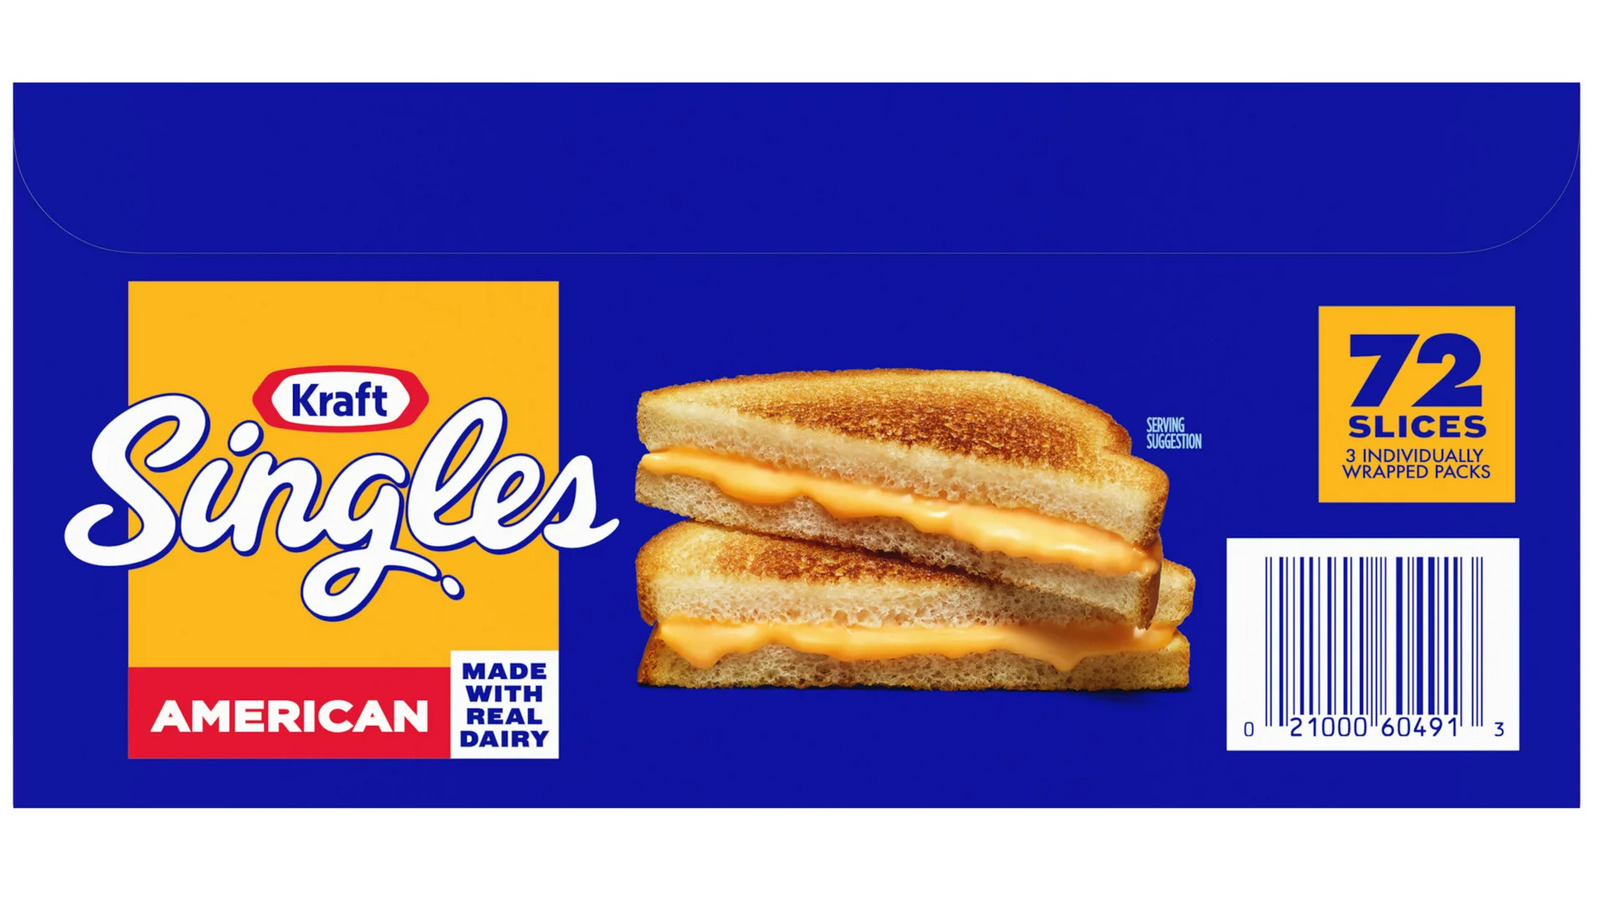 Kraft Cheese Slices Are Being Recalled Over Choking Hazard